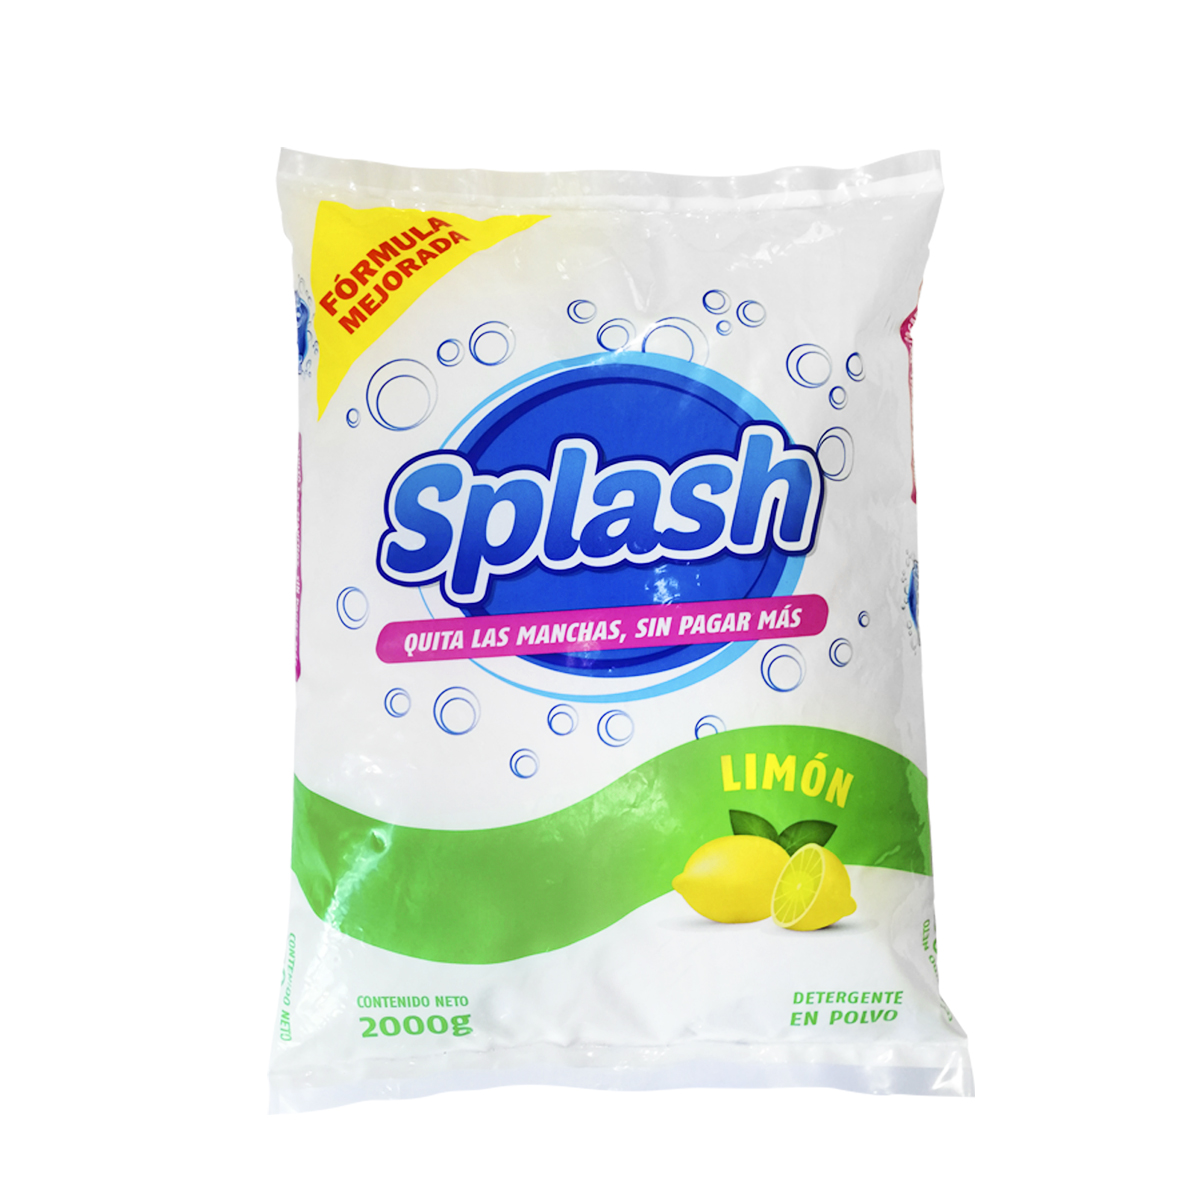 Splash 2000g Limon